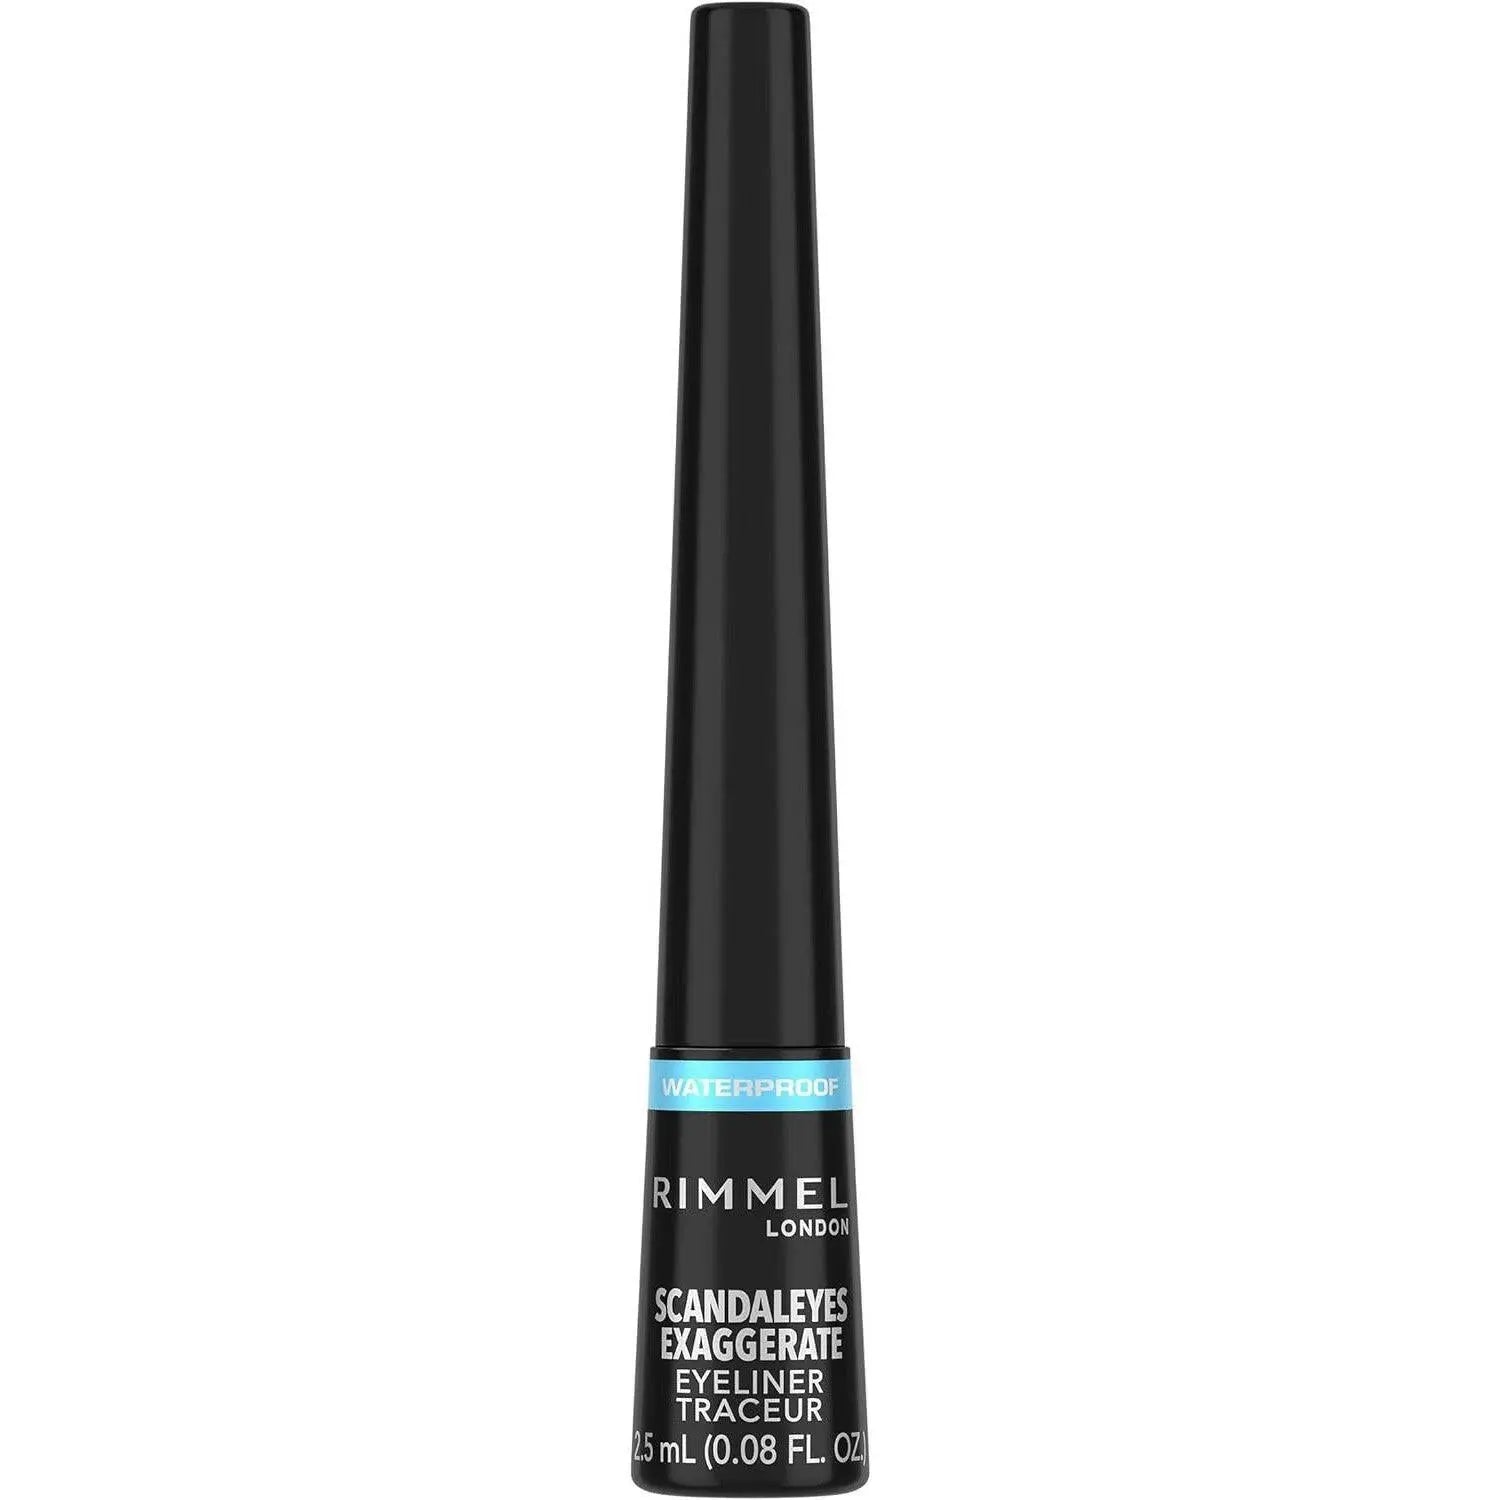 Rimmel London, Exaggerate Waterproof Liquid Eyeliner, Black, 2.5 ml